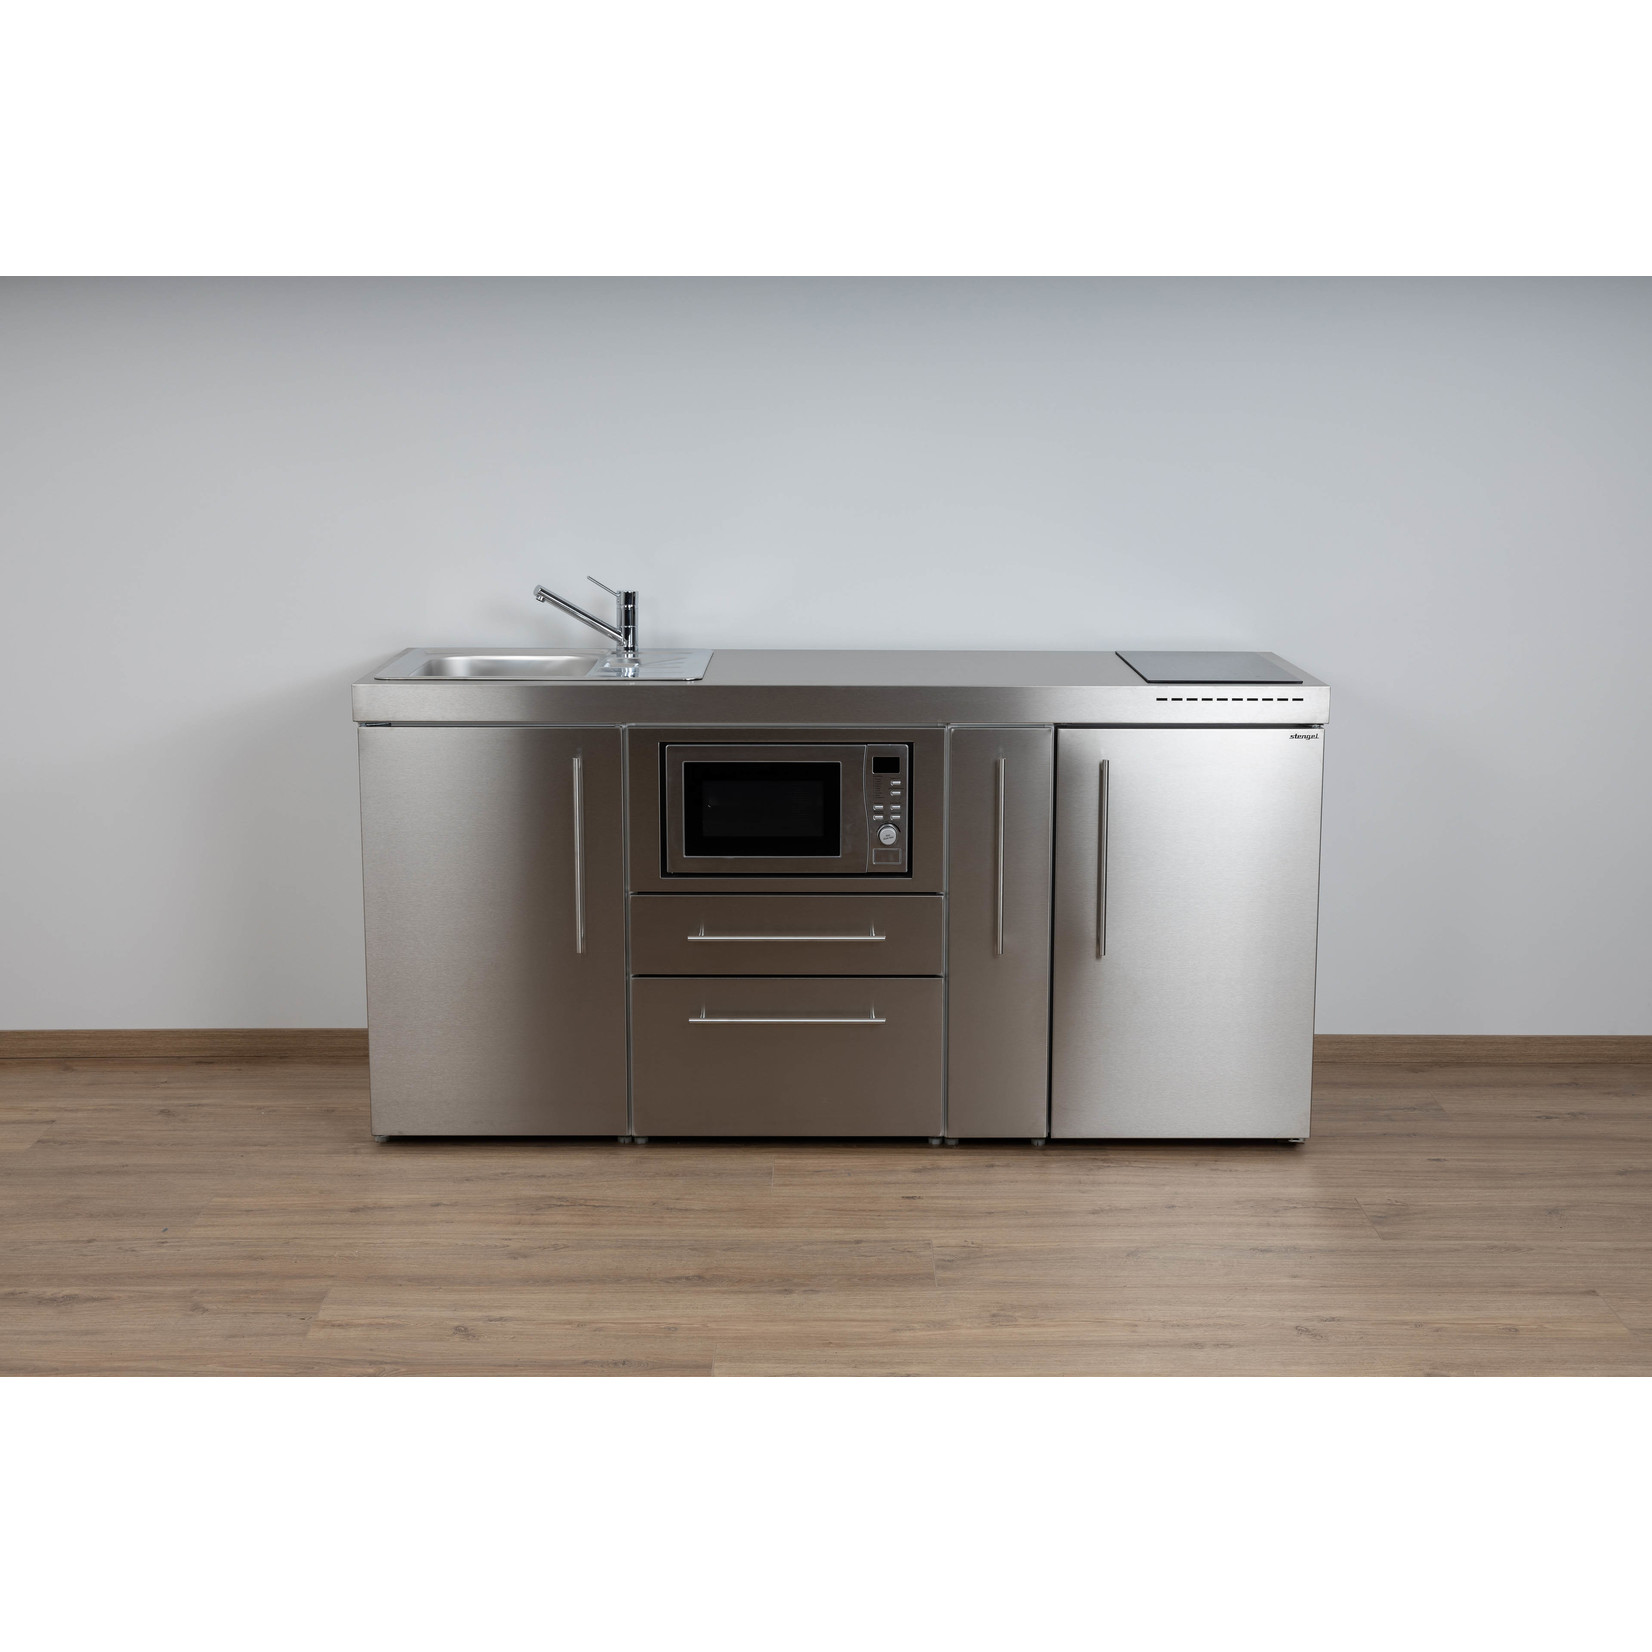 Kitchenette ELM180A met koelkast, magnetron en apothekerskast